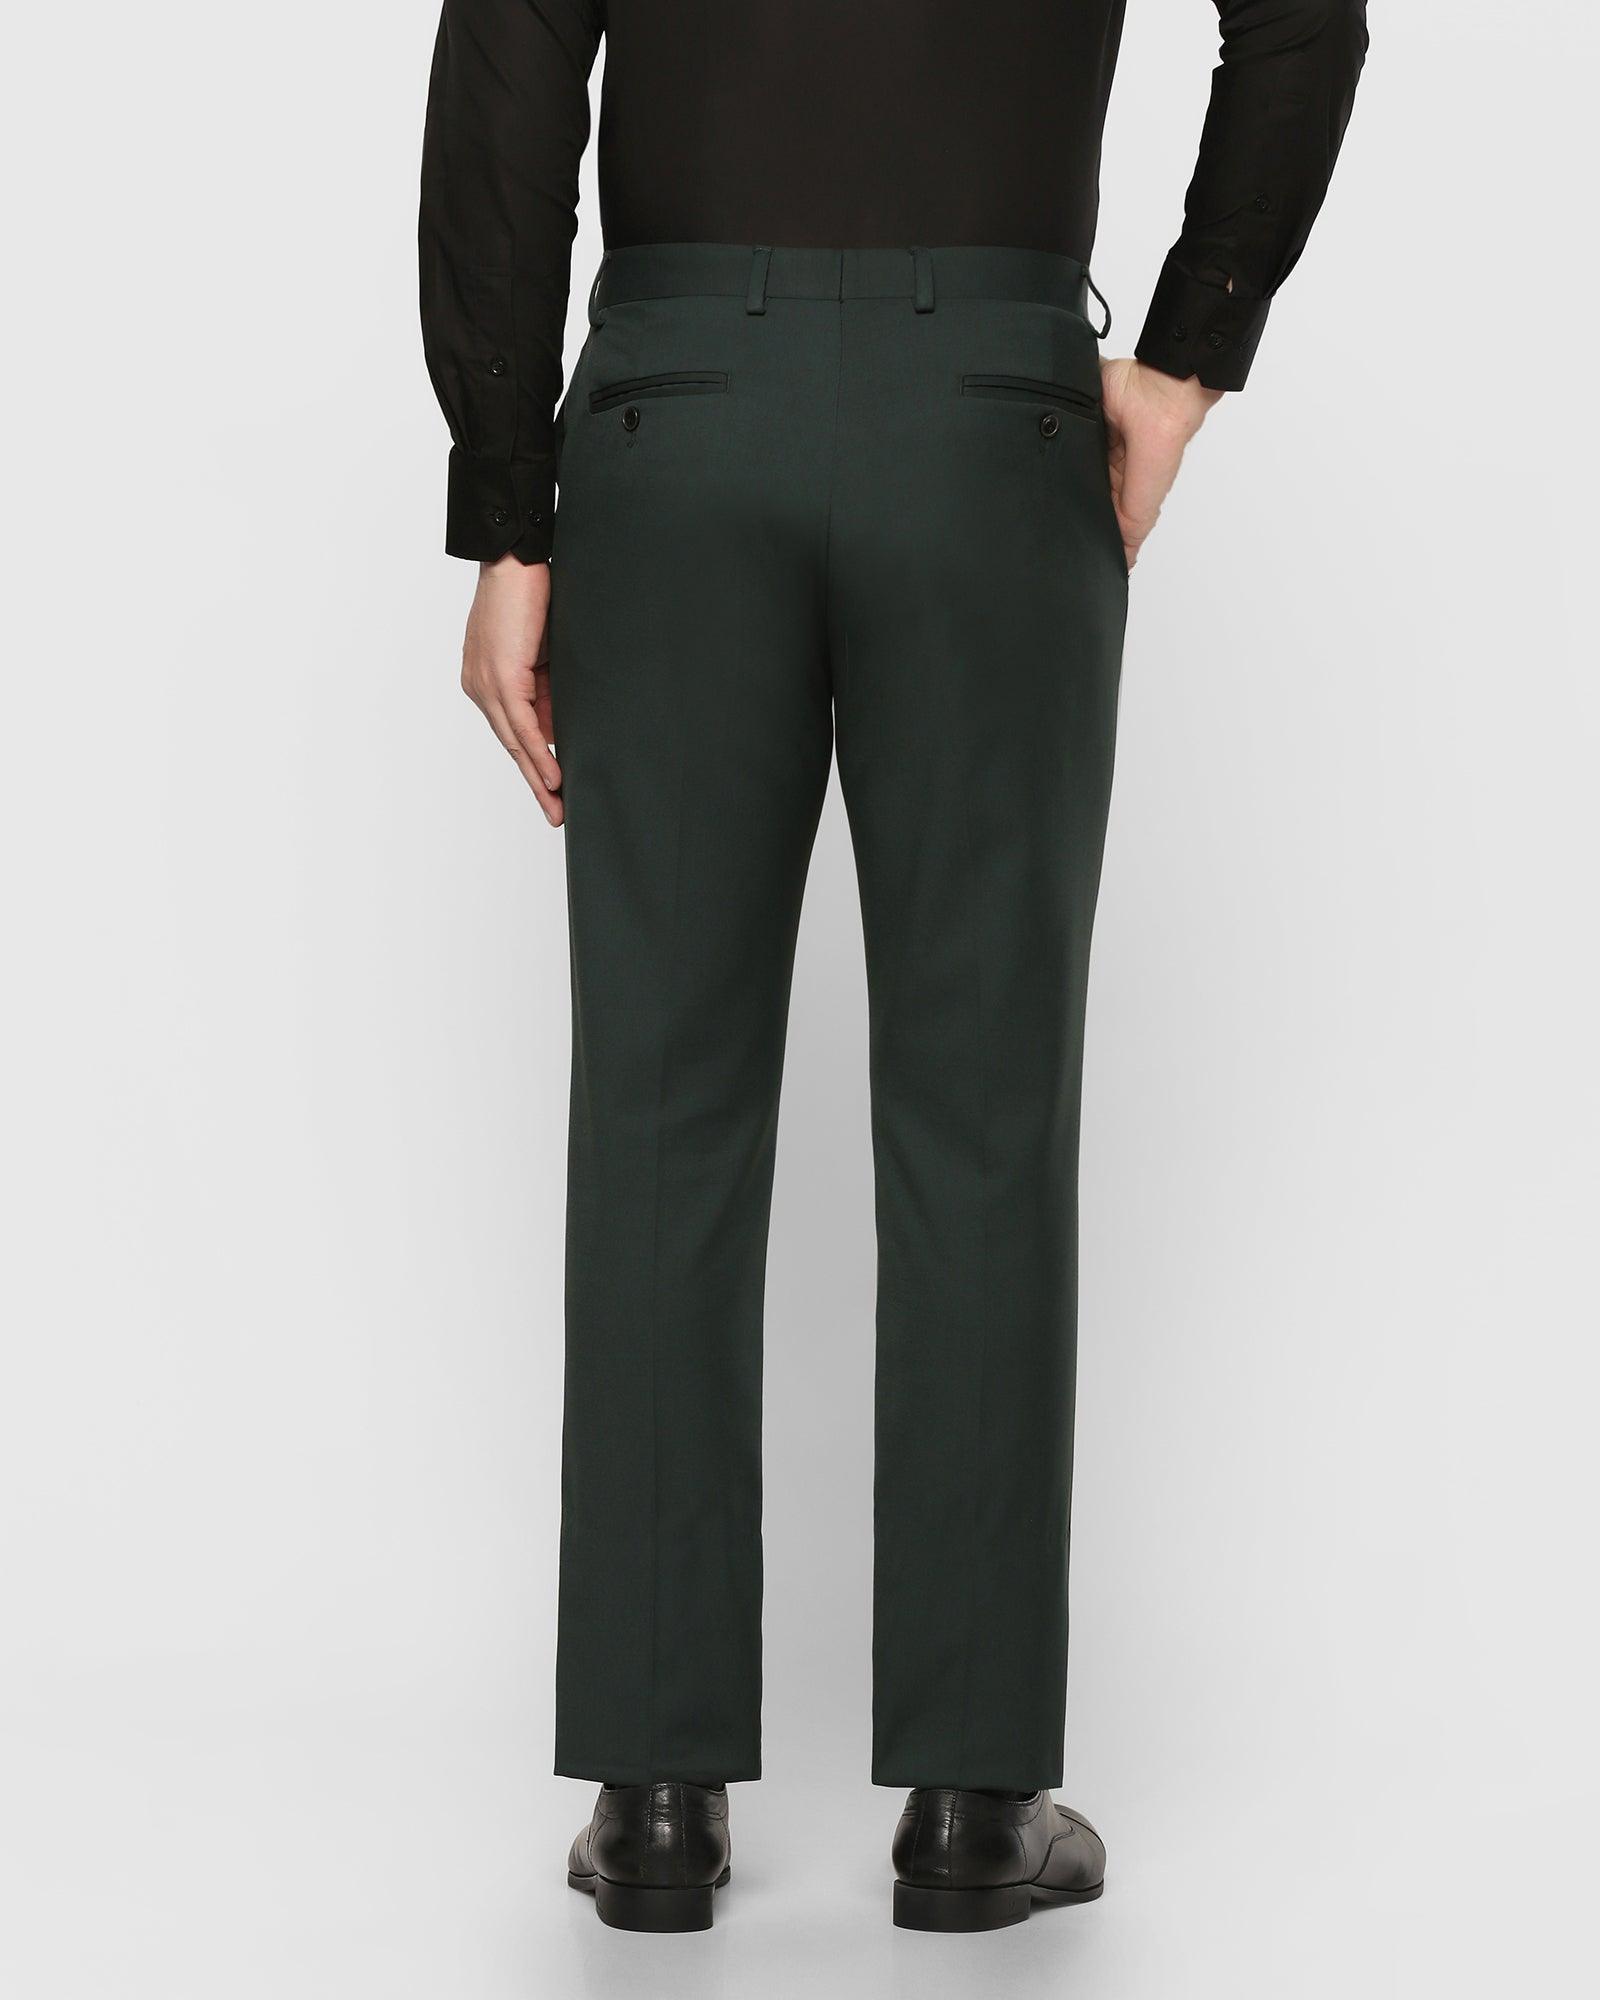 Buy Arrow Smart Flex Check Formal Trousers - NNNOW.com